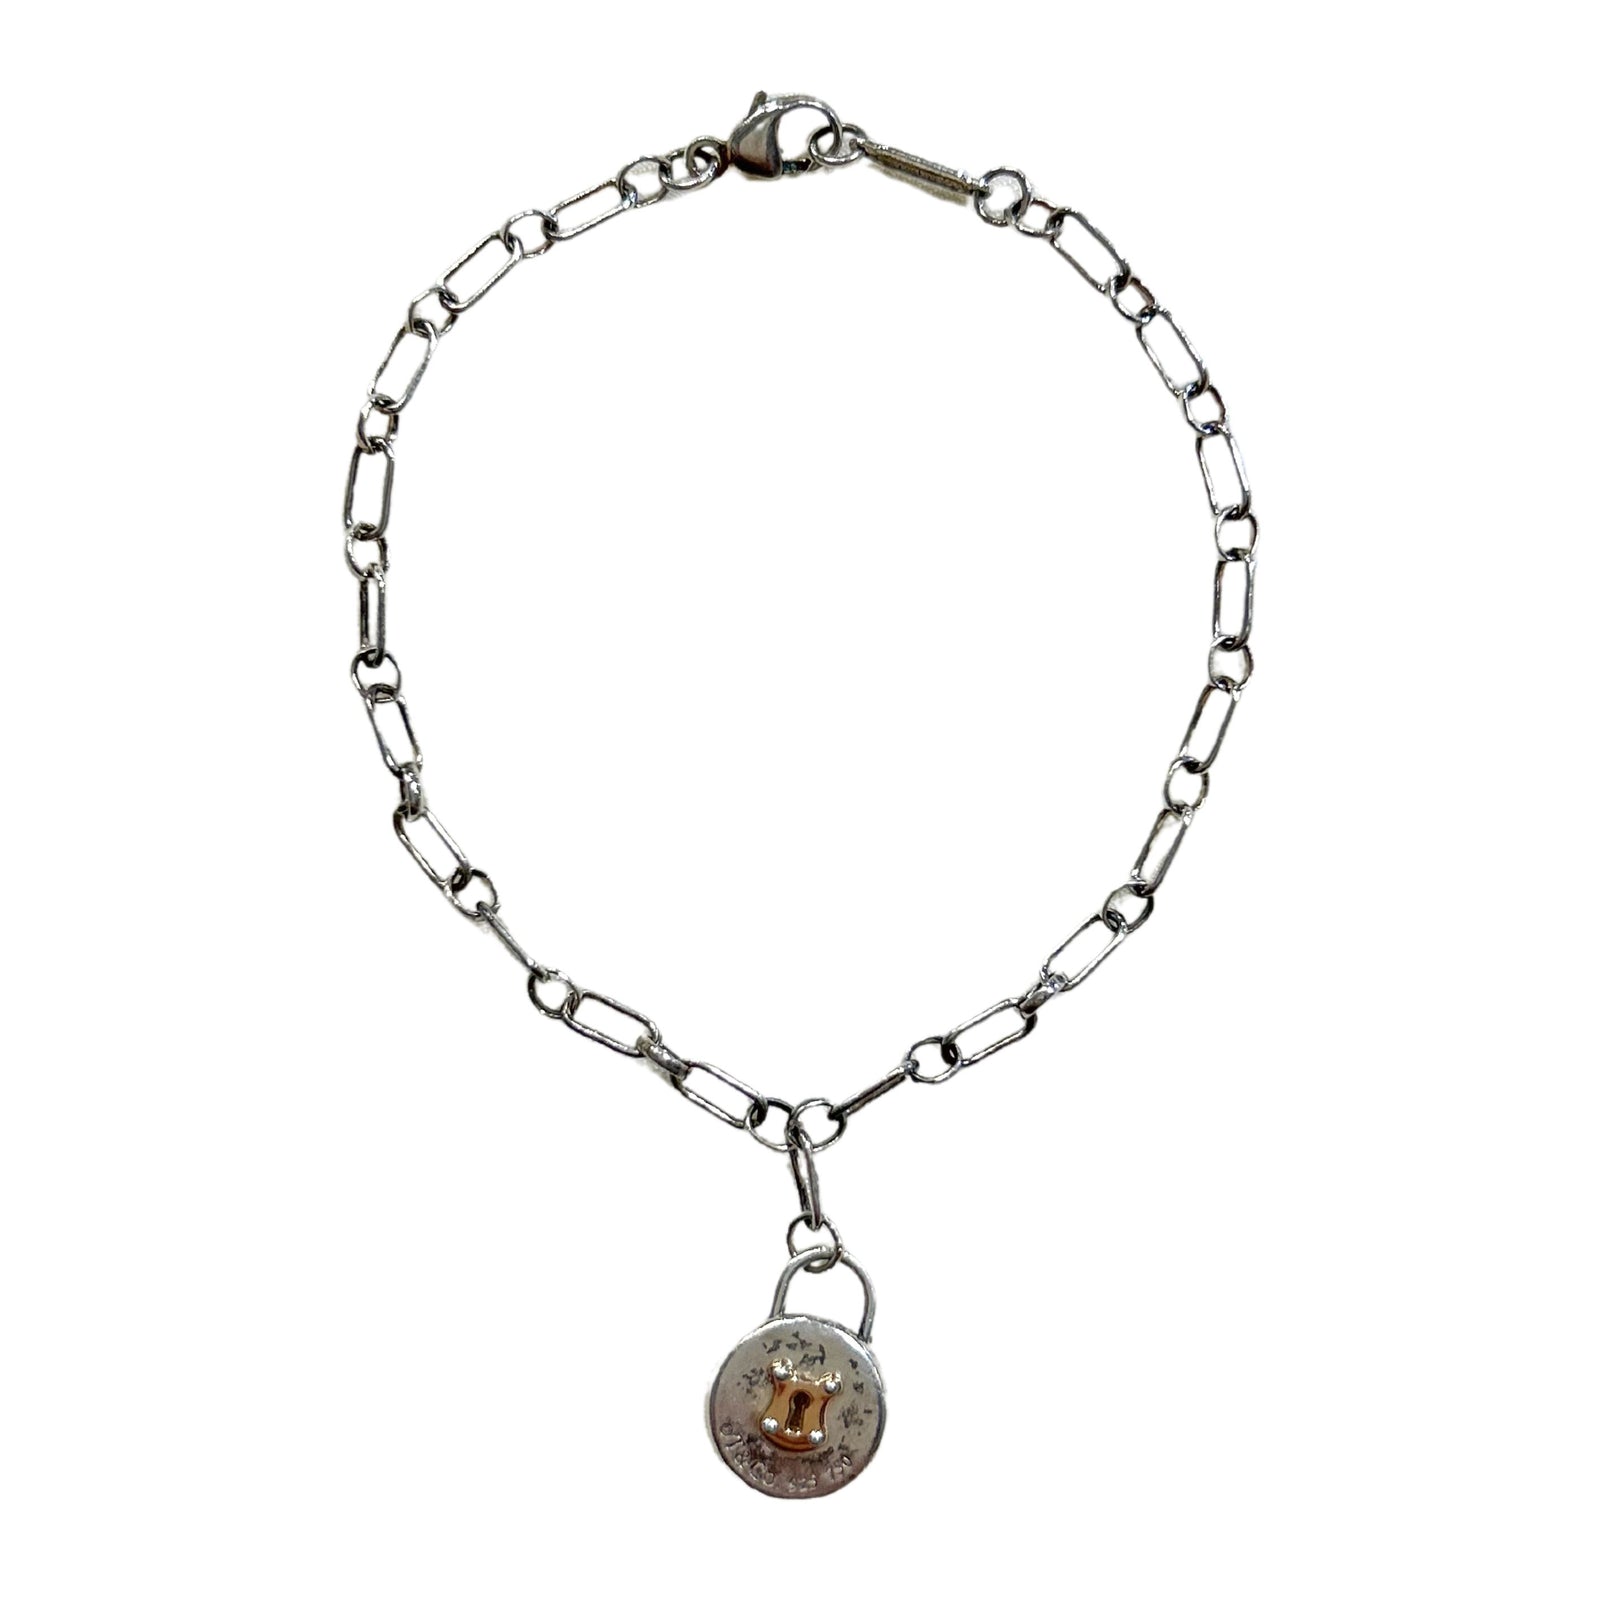 Silver 18K Gold Locks Bracelet Bangle Oval Link Chain Gift Love